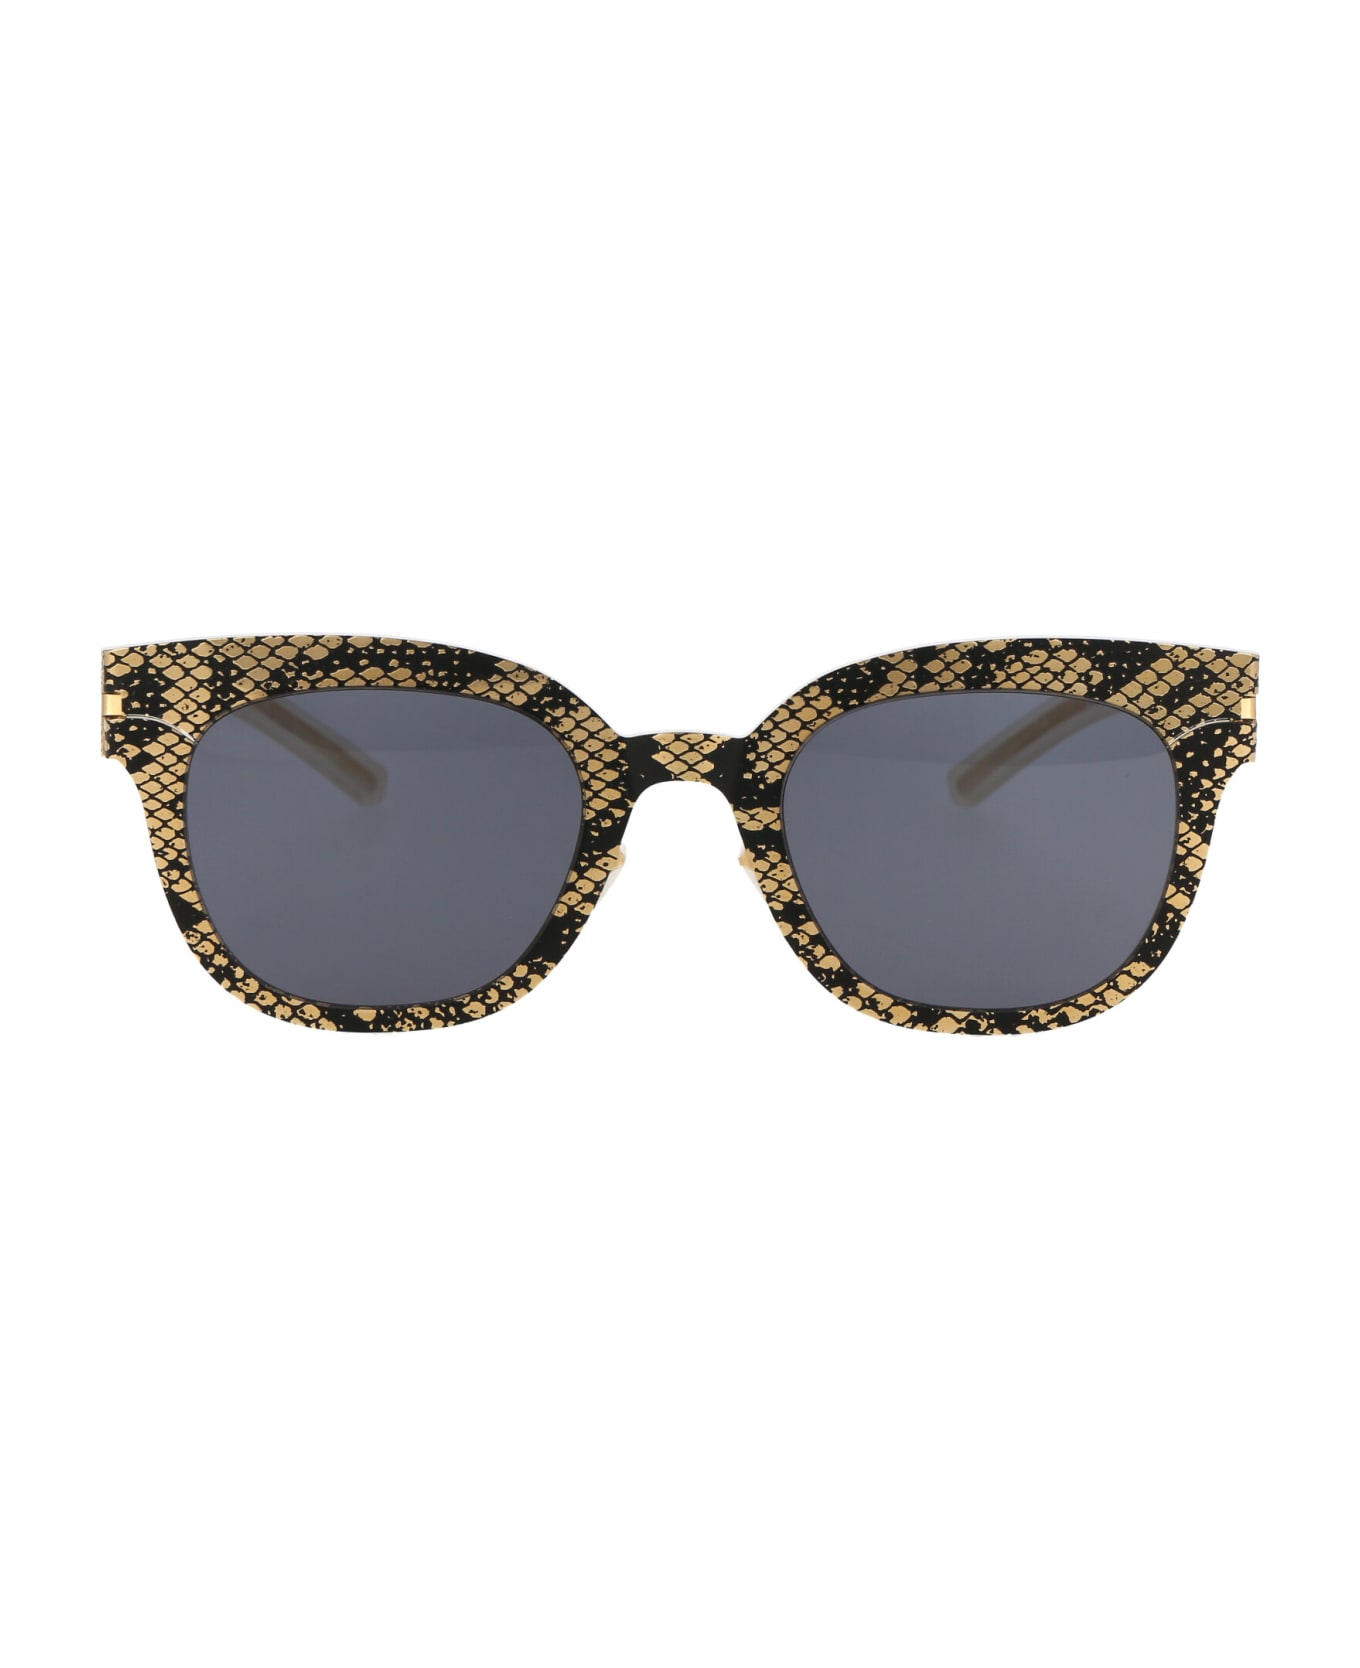 Mykita Mmtransfer002 Sunglasses - 239 Gold Black Python Dark Grey Solid